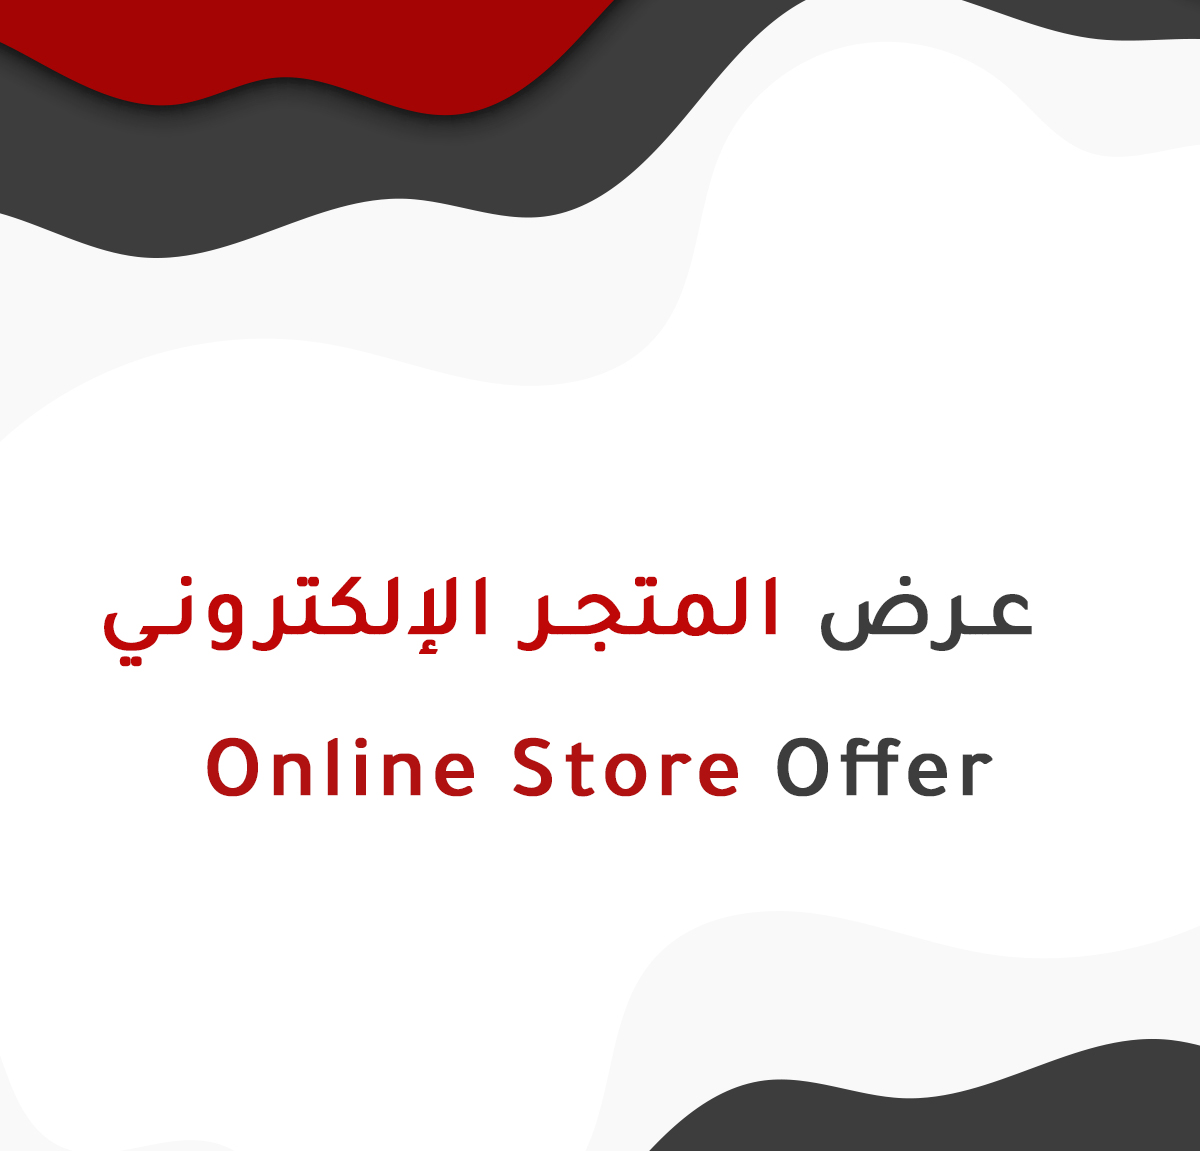 Online Store Offer